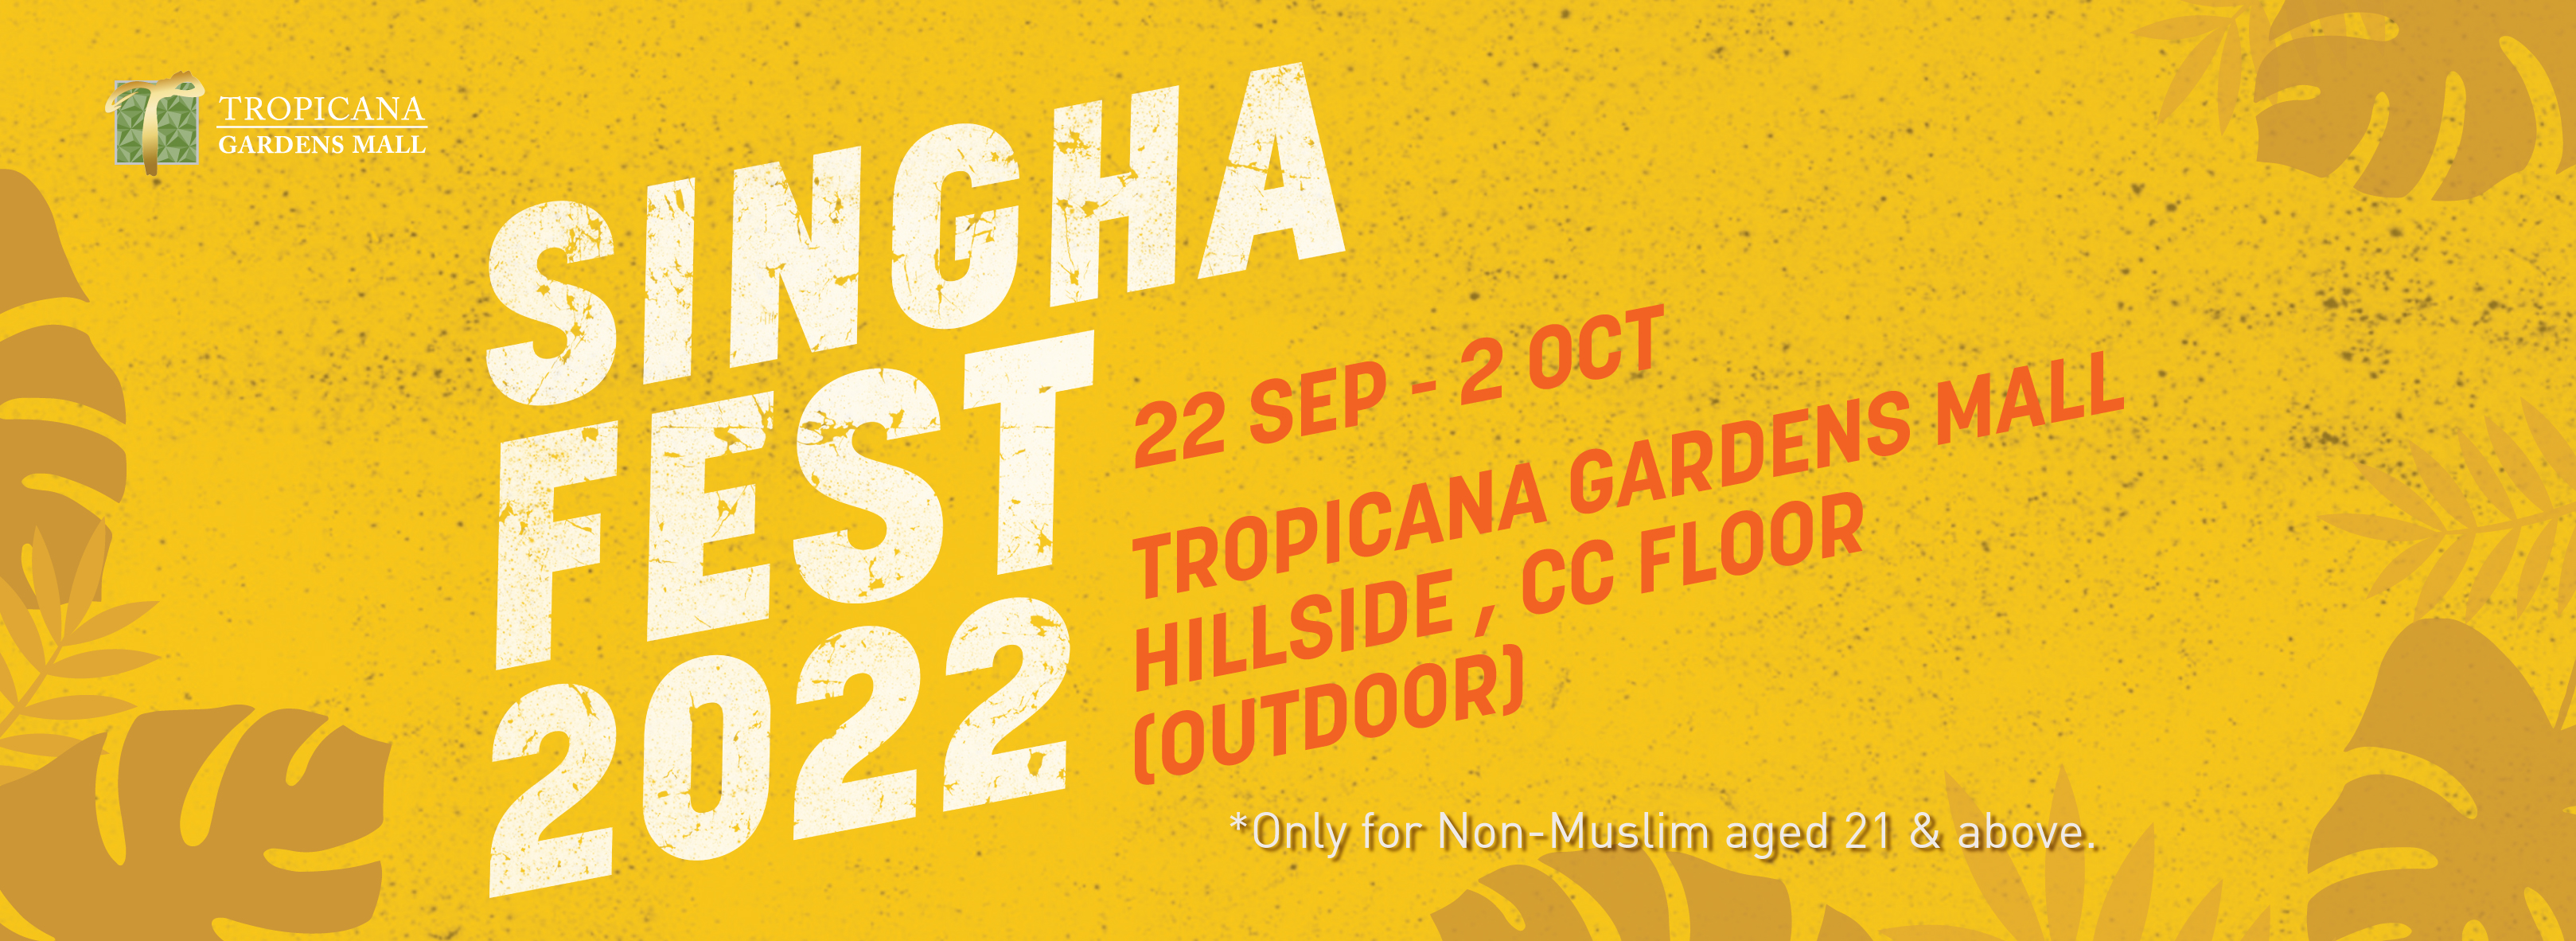 Tropicana Gardens Mall Singha Fest 2022